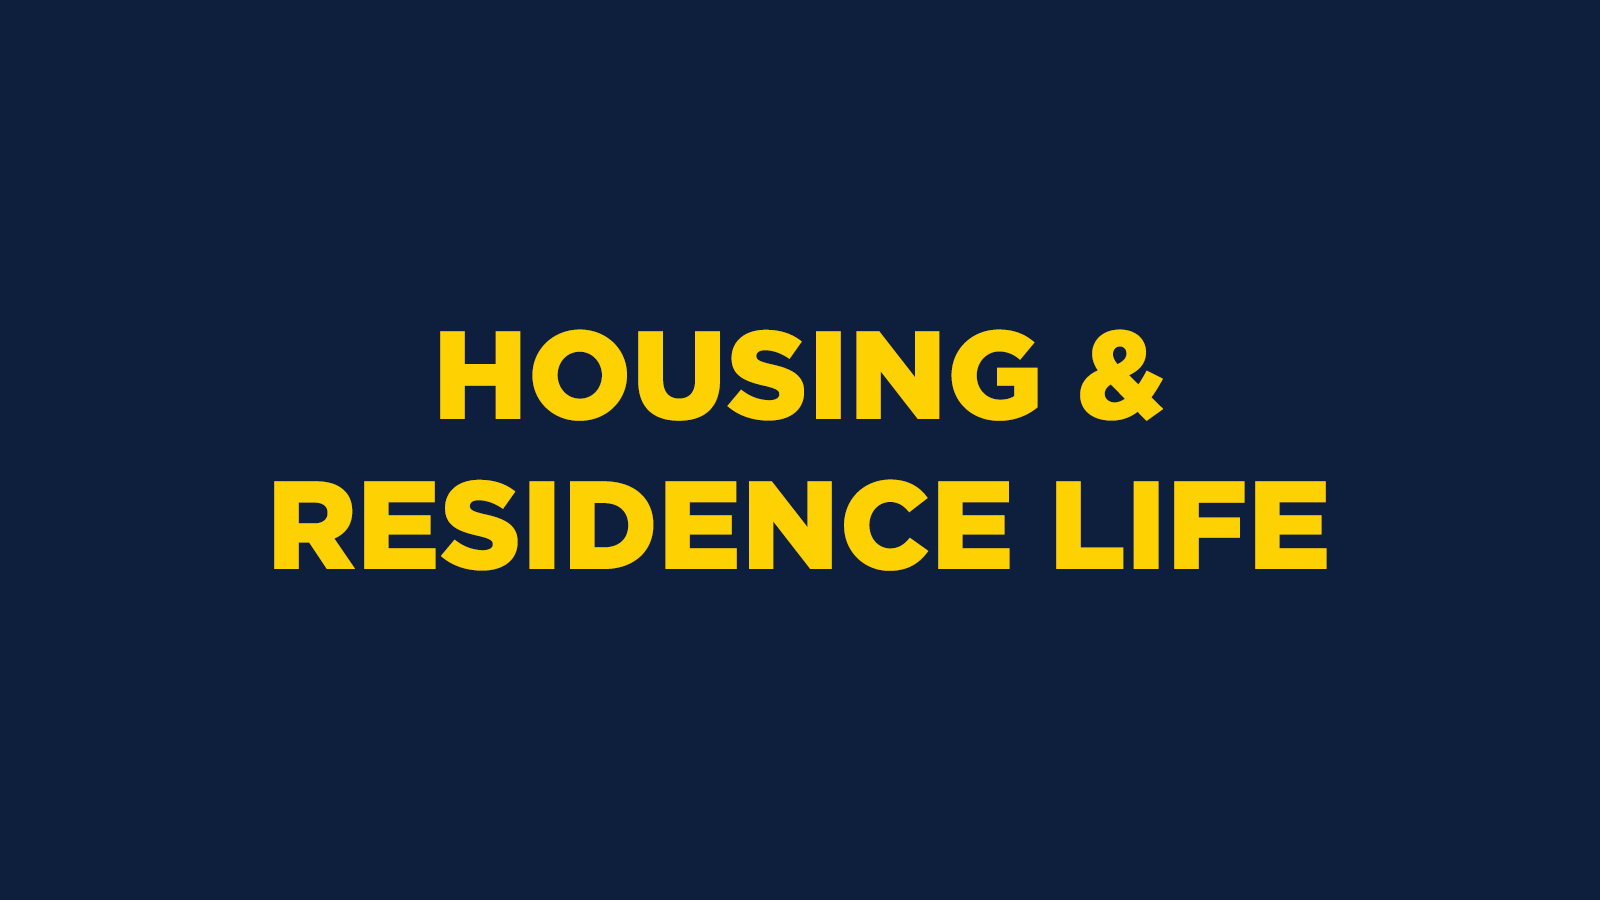 Housing & Residence Life